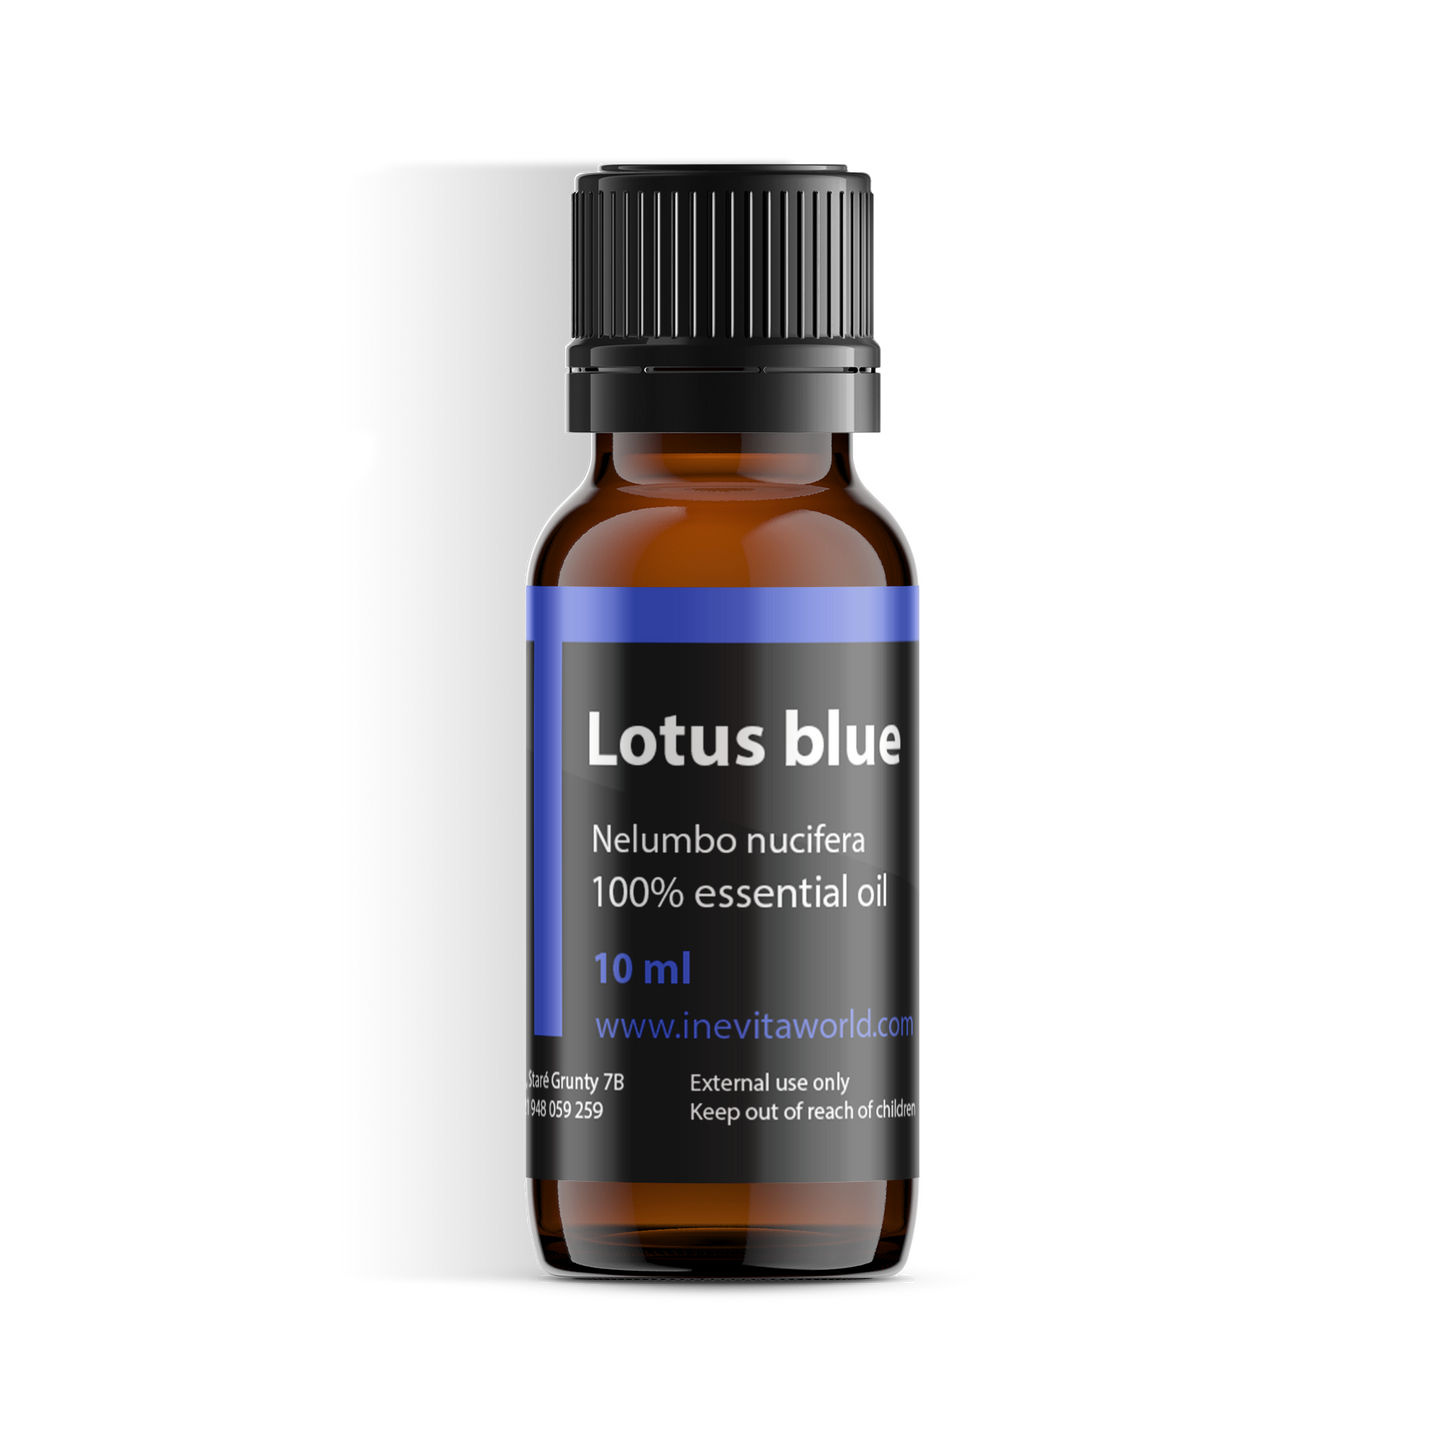 Lotus Blue Absolute